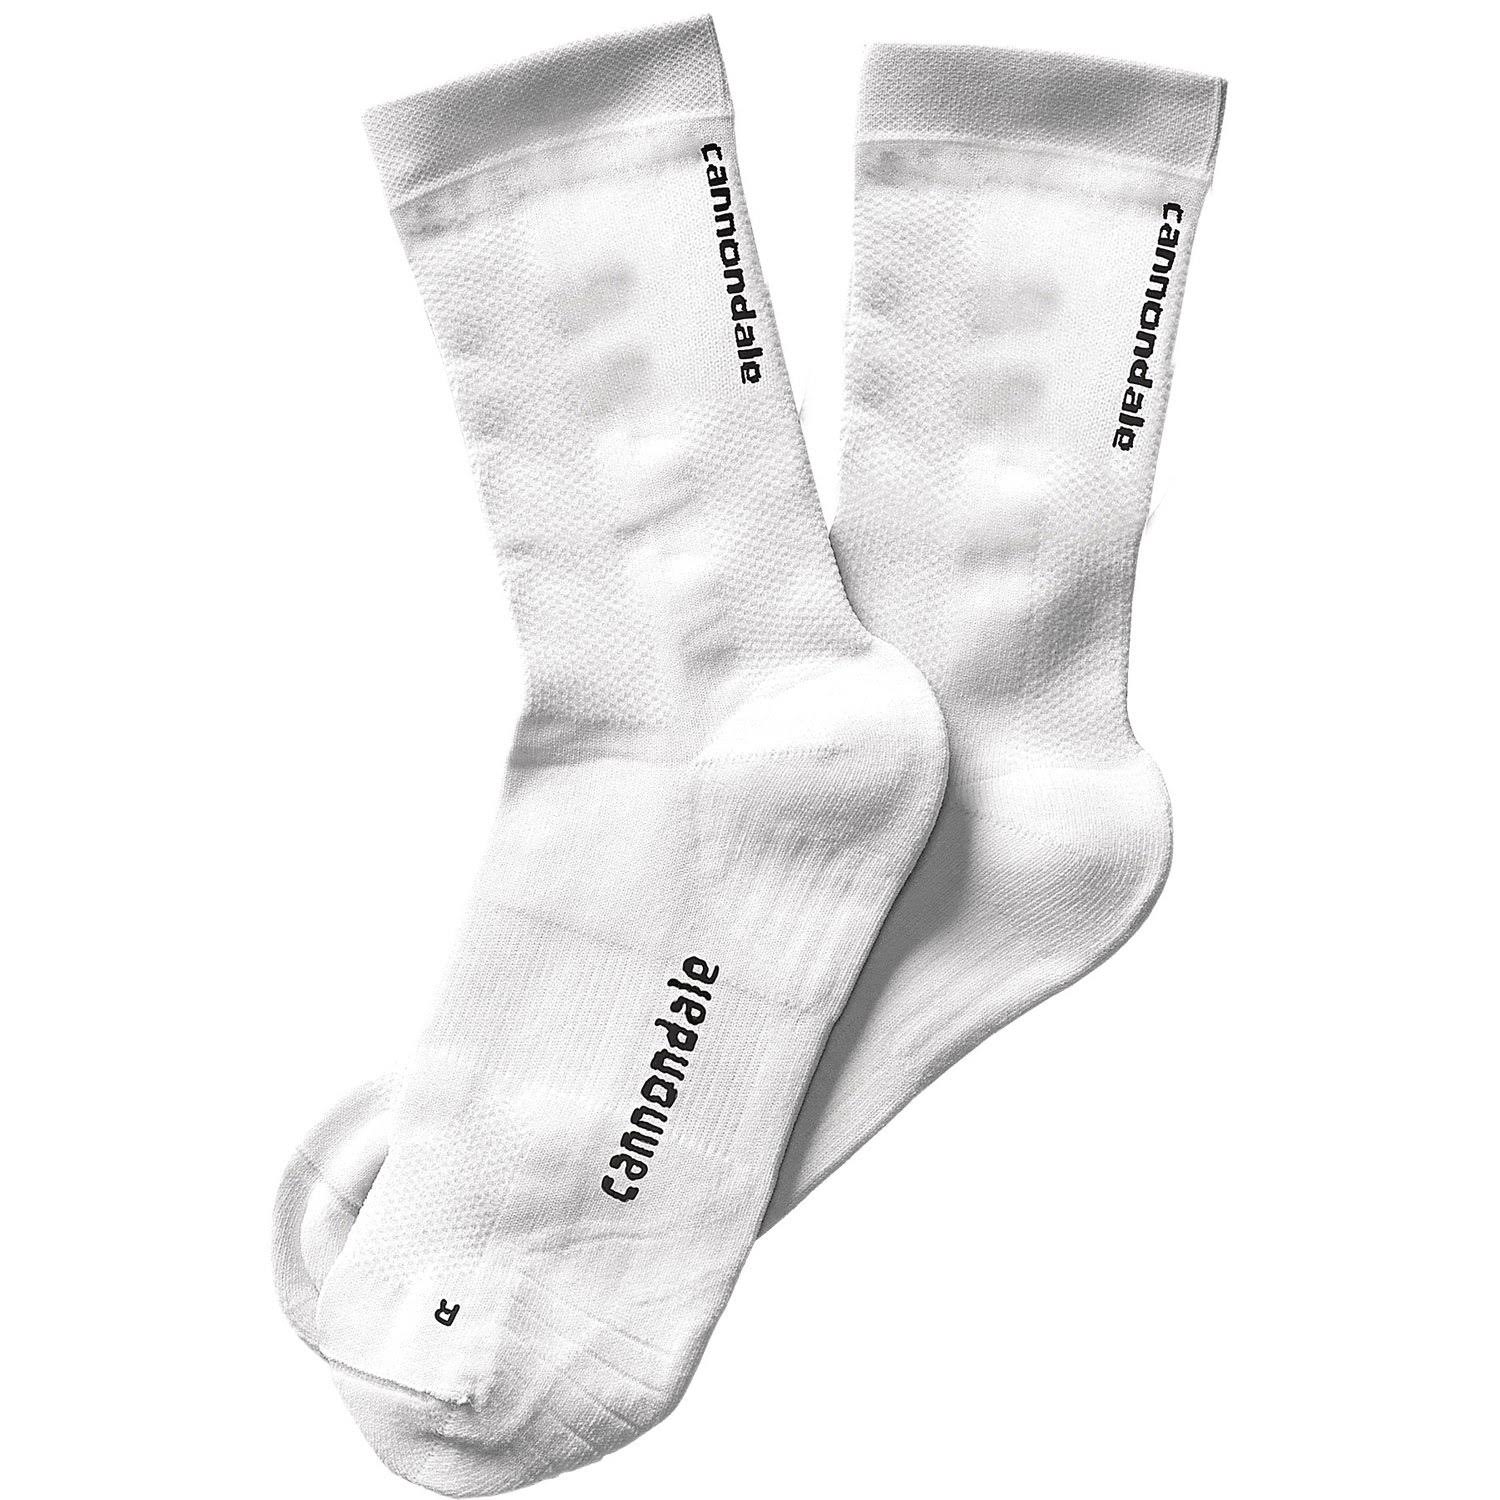 Cannondale Men's High Socks, White, X-Large